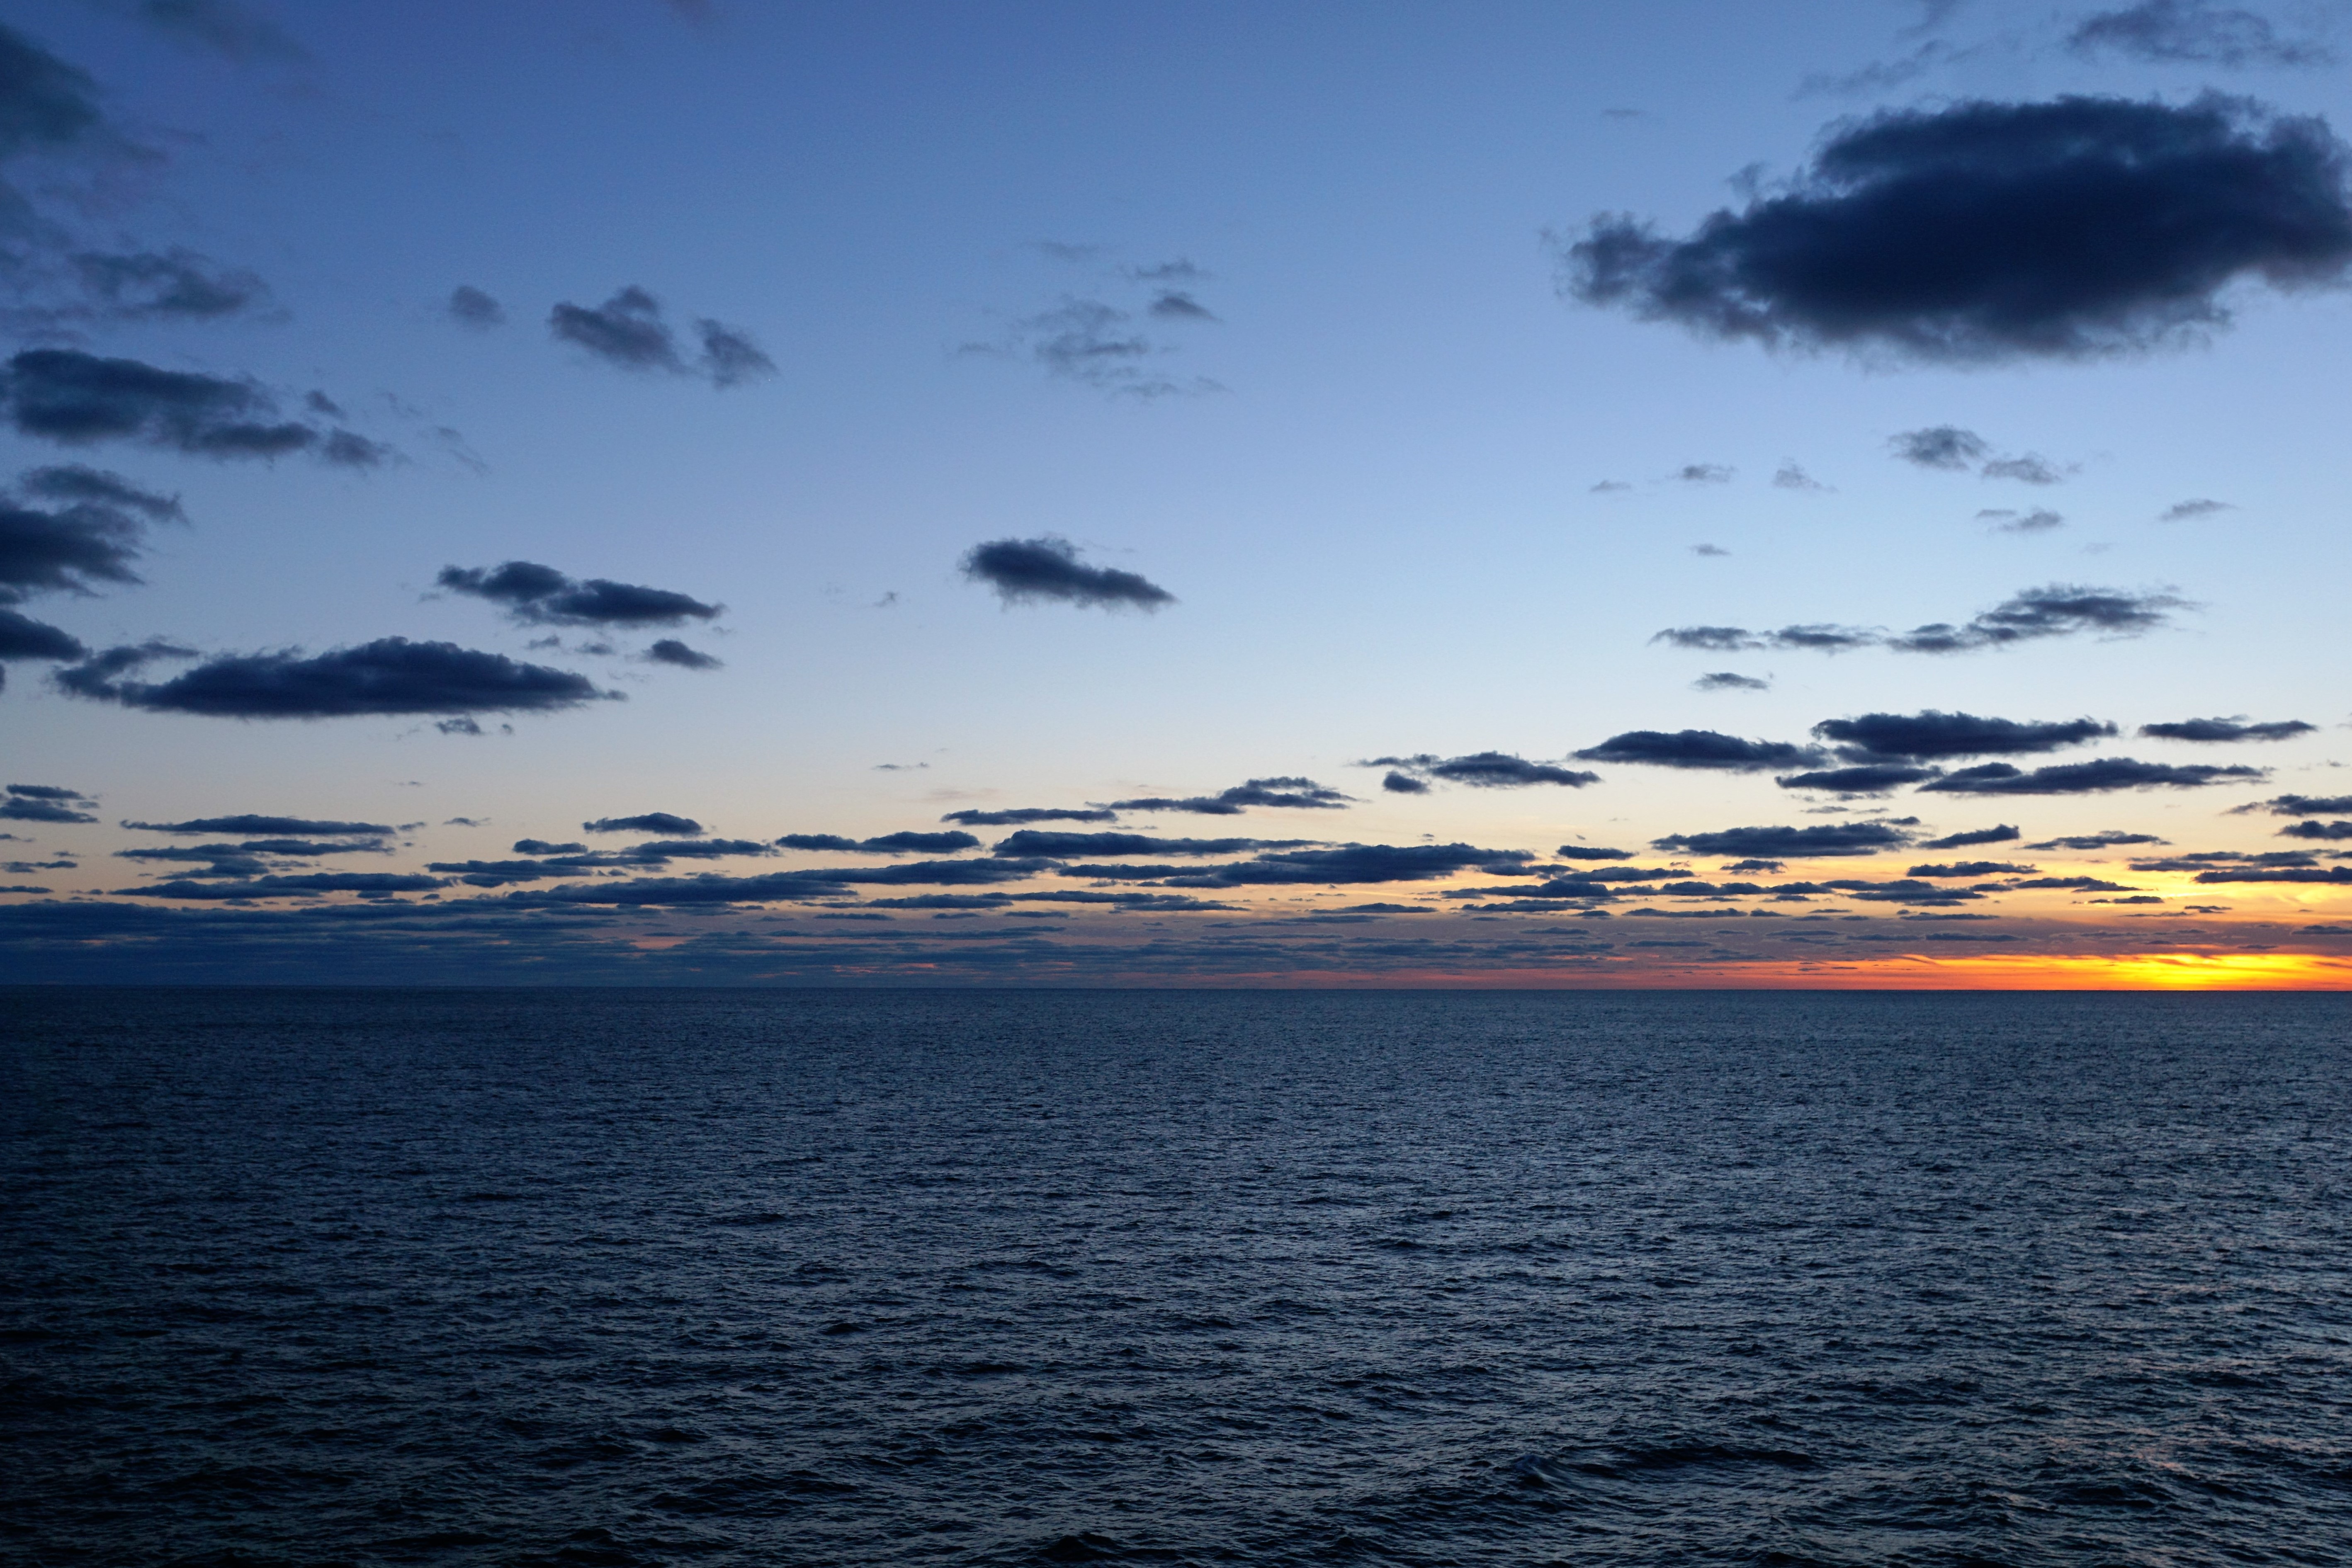 HD wallpaper Atlantic Ocean Sunset wather background HQ s  Wallpaper  Flare